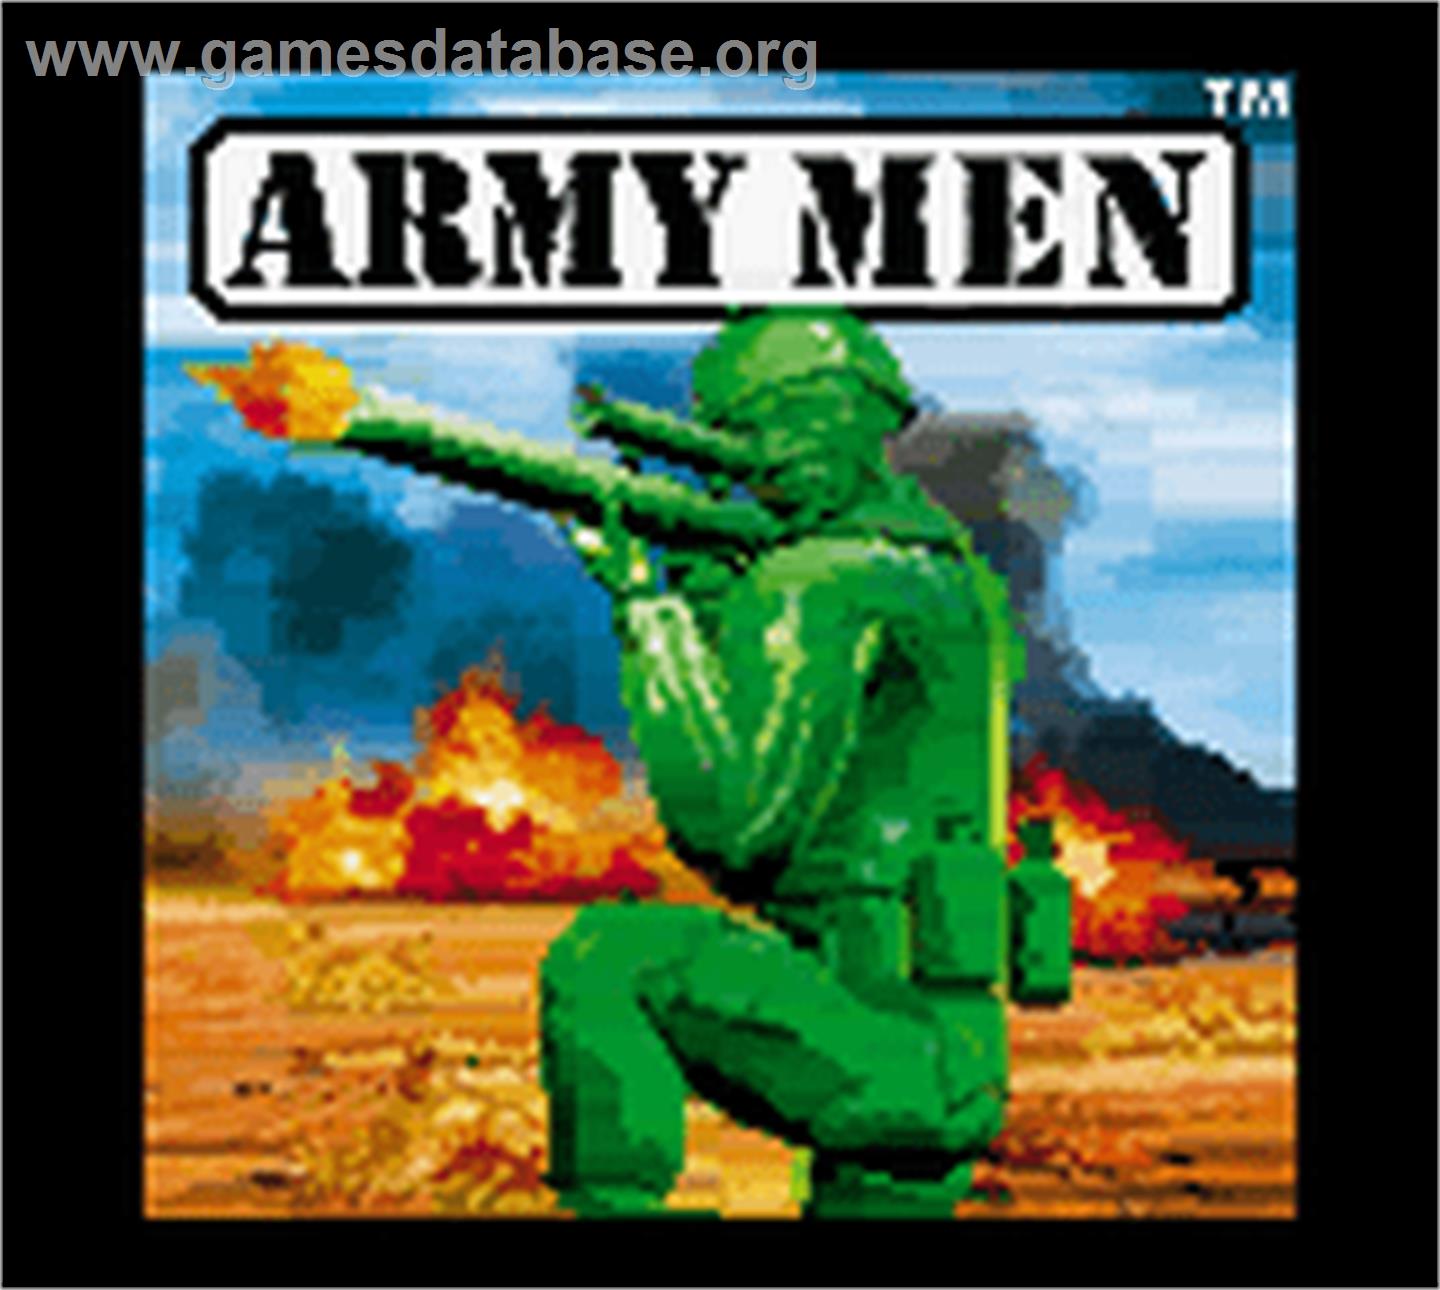 Army Men: Air Combat - Nintendo Game Boy Color - Artwork - Title Screen